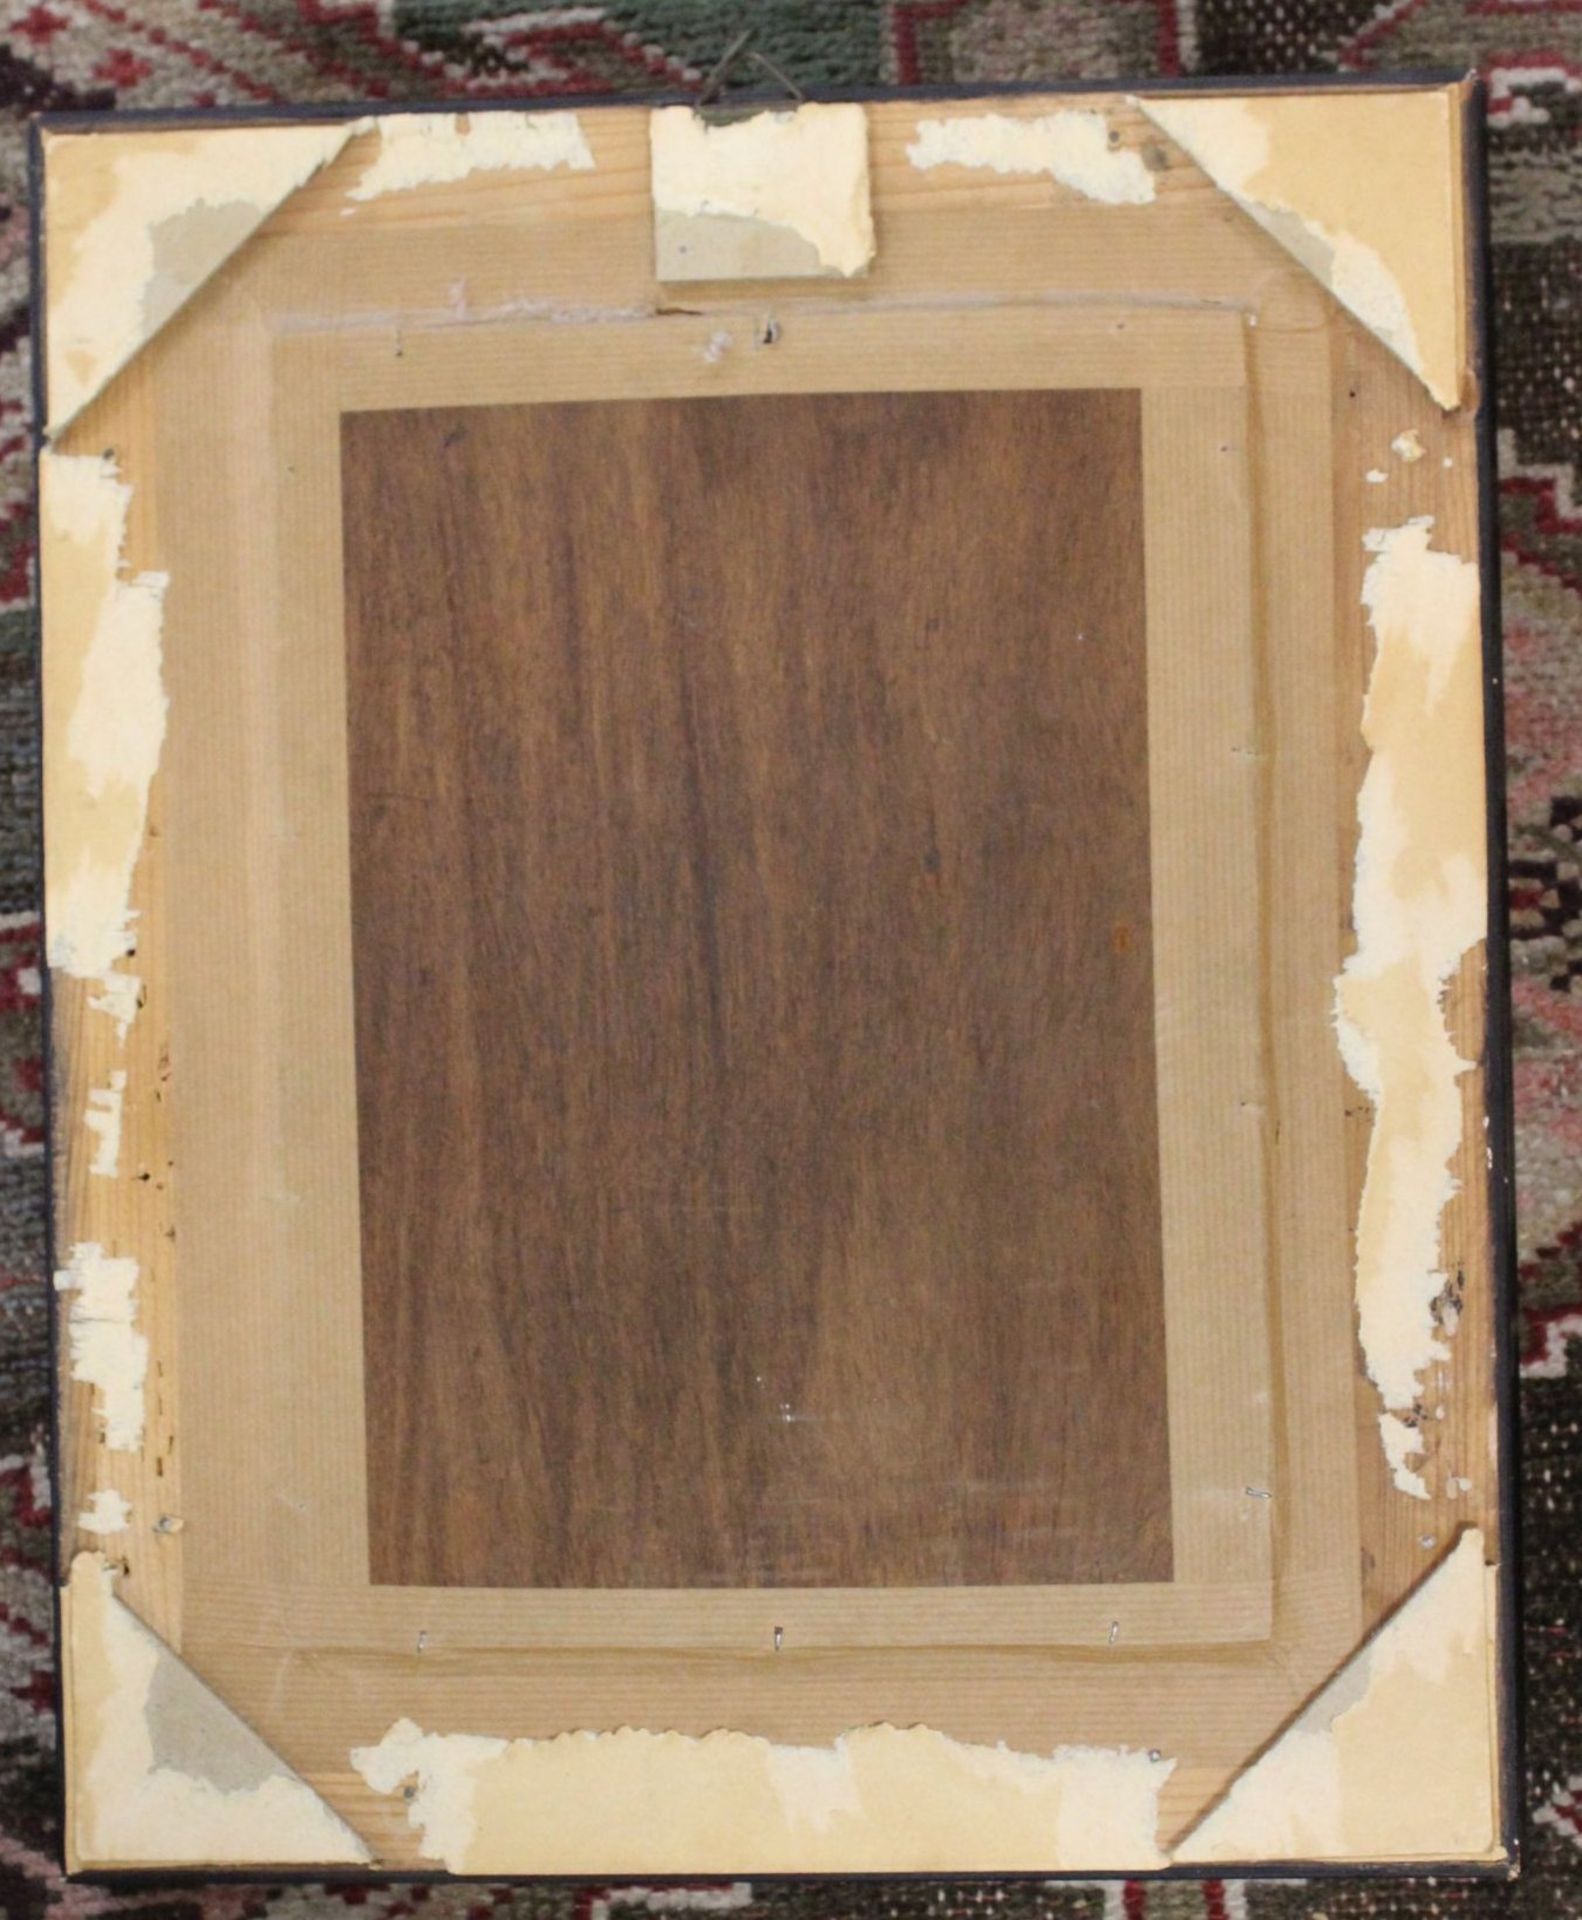 anonym, Bärtiger mit Kappe, Öl/Holz, wohl 19. Jhd., Rahmen beschädigt, RG 38 x 31,5cm. - Bild 3 aus 3